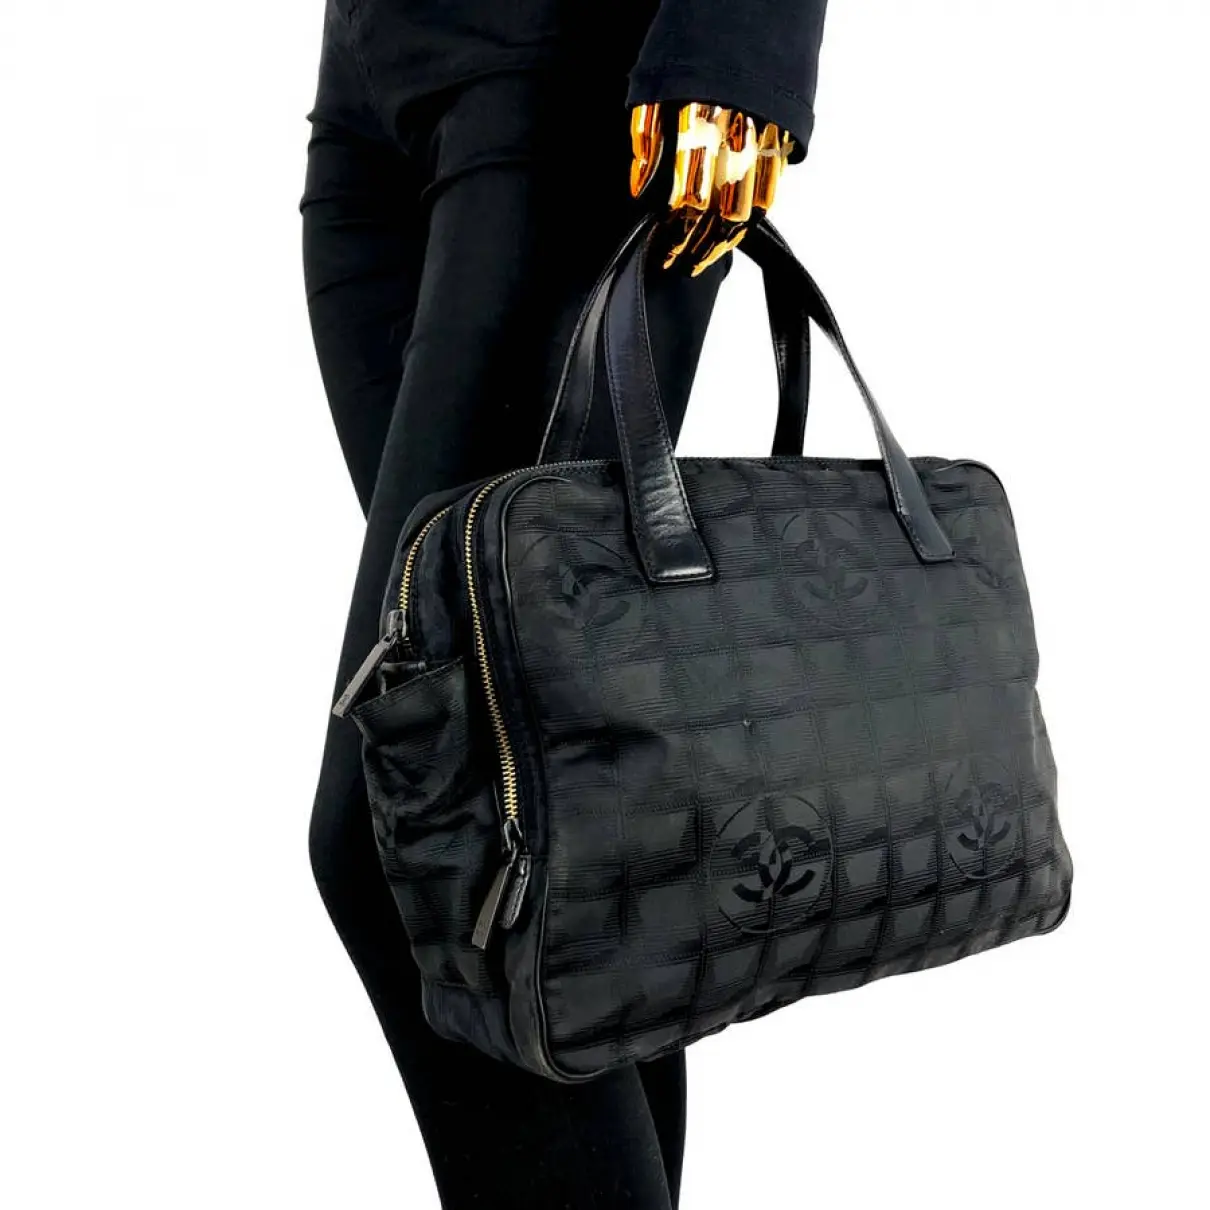 Buy Chanel Cloth satchel online